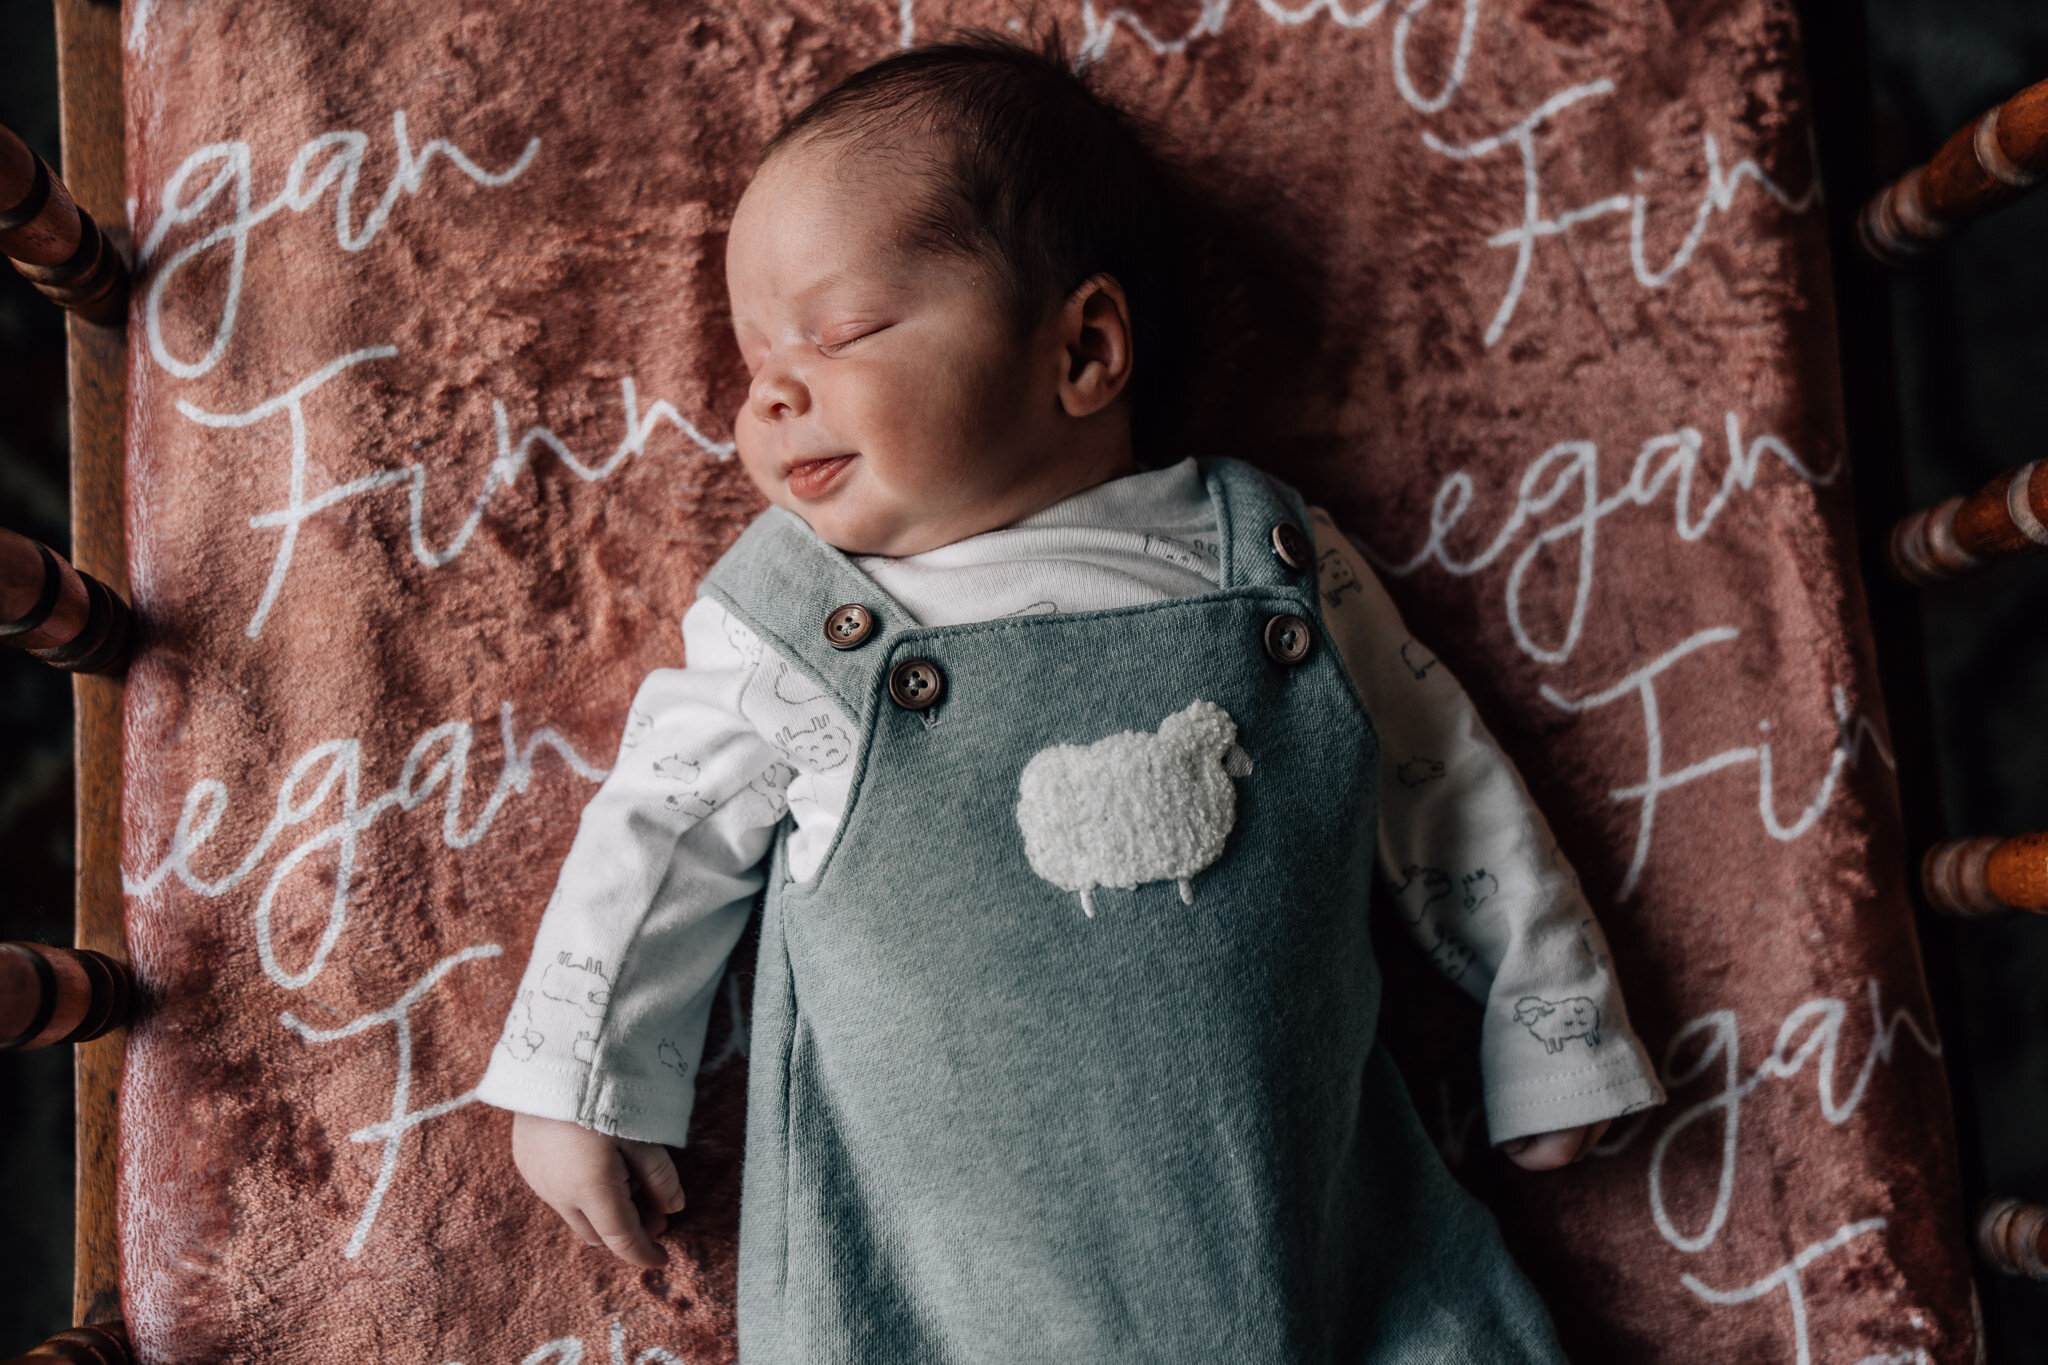 Dana-Jacobs-Photography-Finnegan-newborn-photography-session-st-louis-Web-no-watermark47-1623.JPG